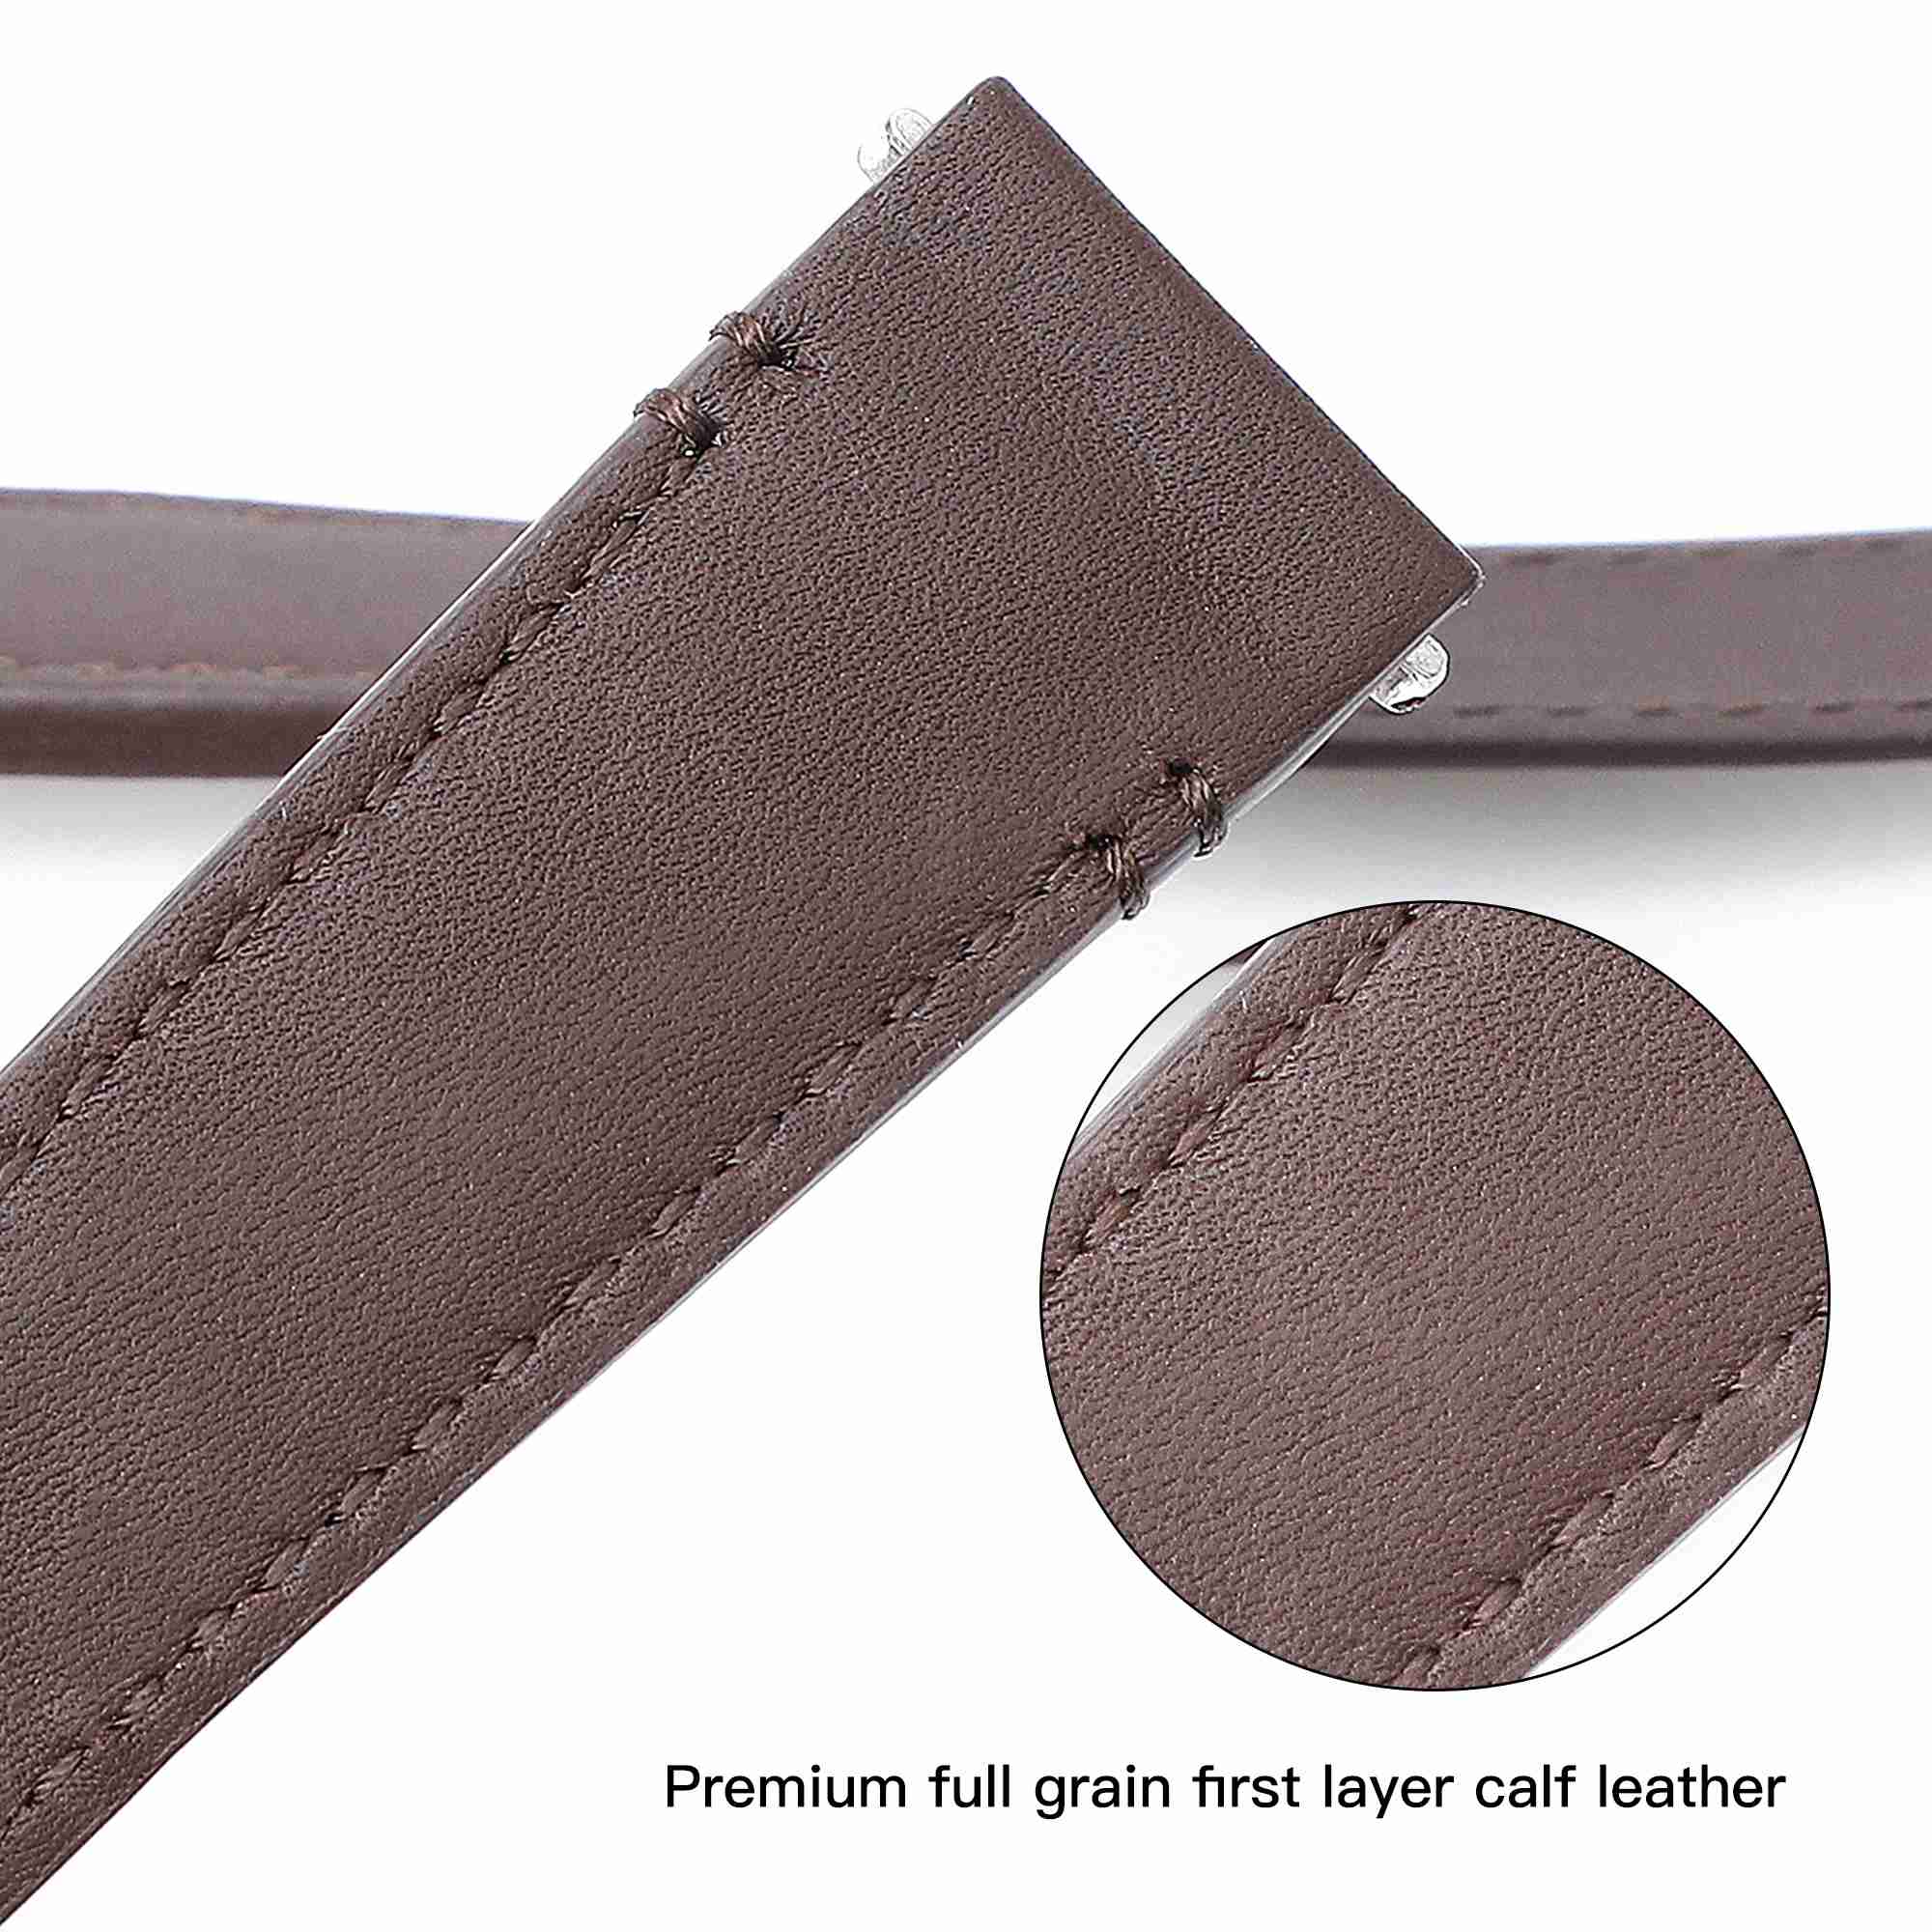 Premium full grain first layer calfskin leather material